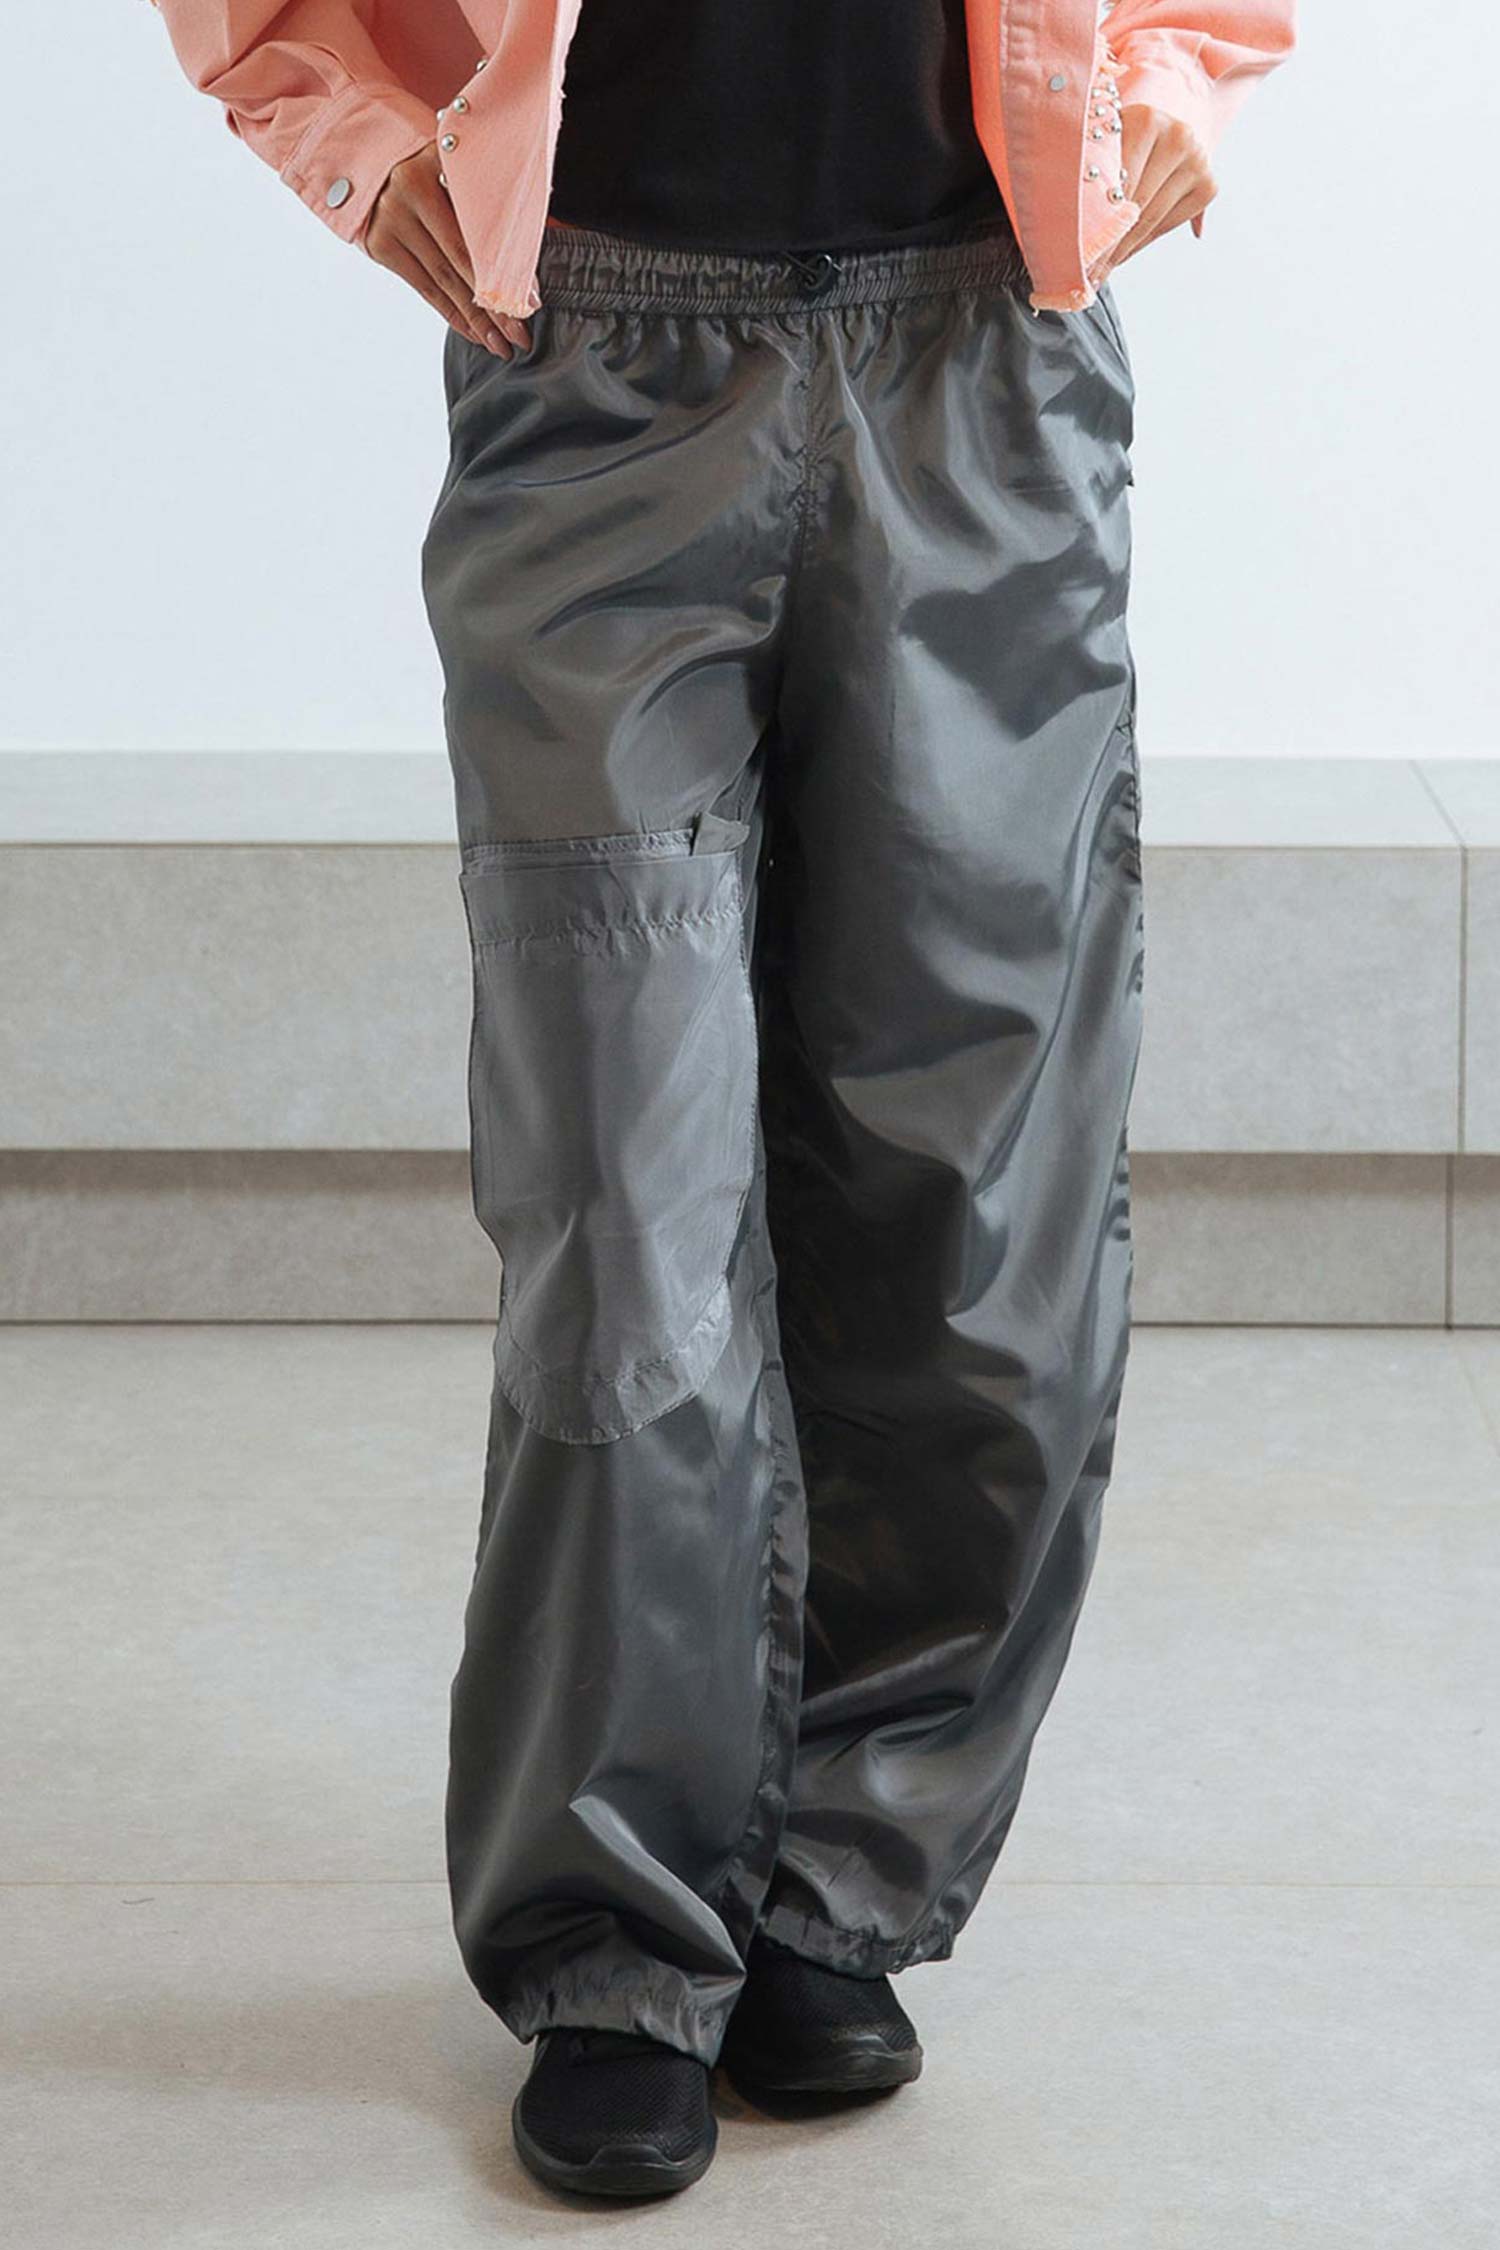 Waterproof parachute trousers